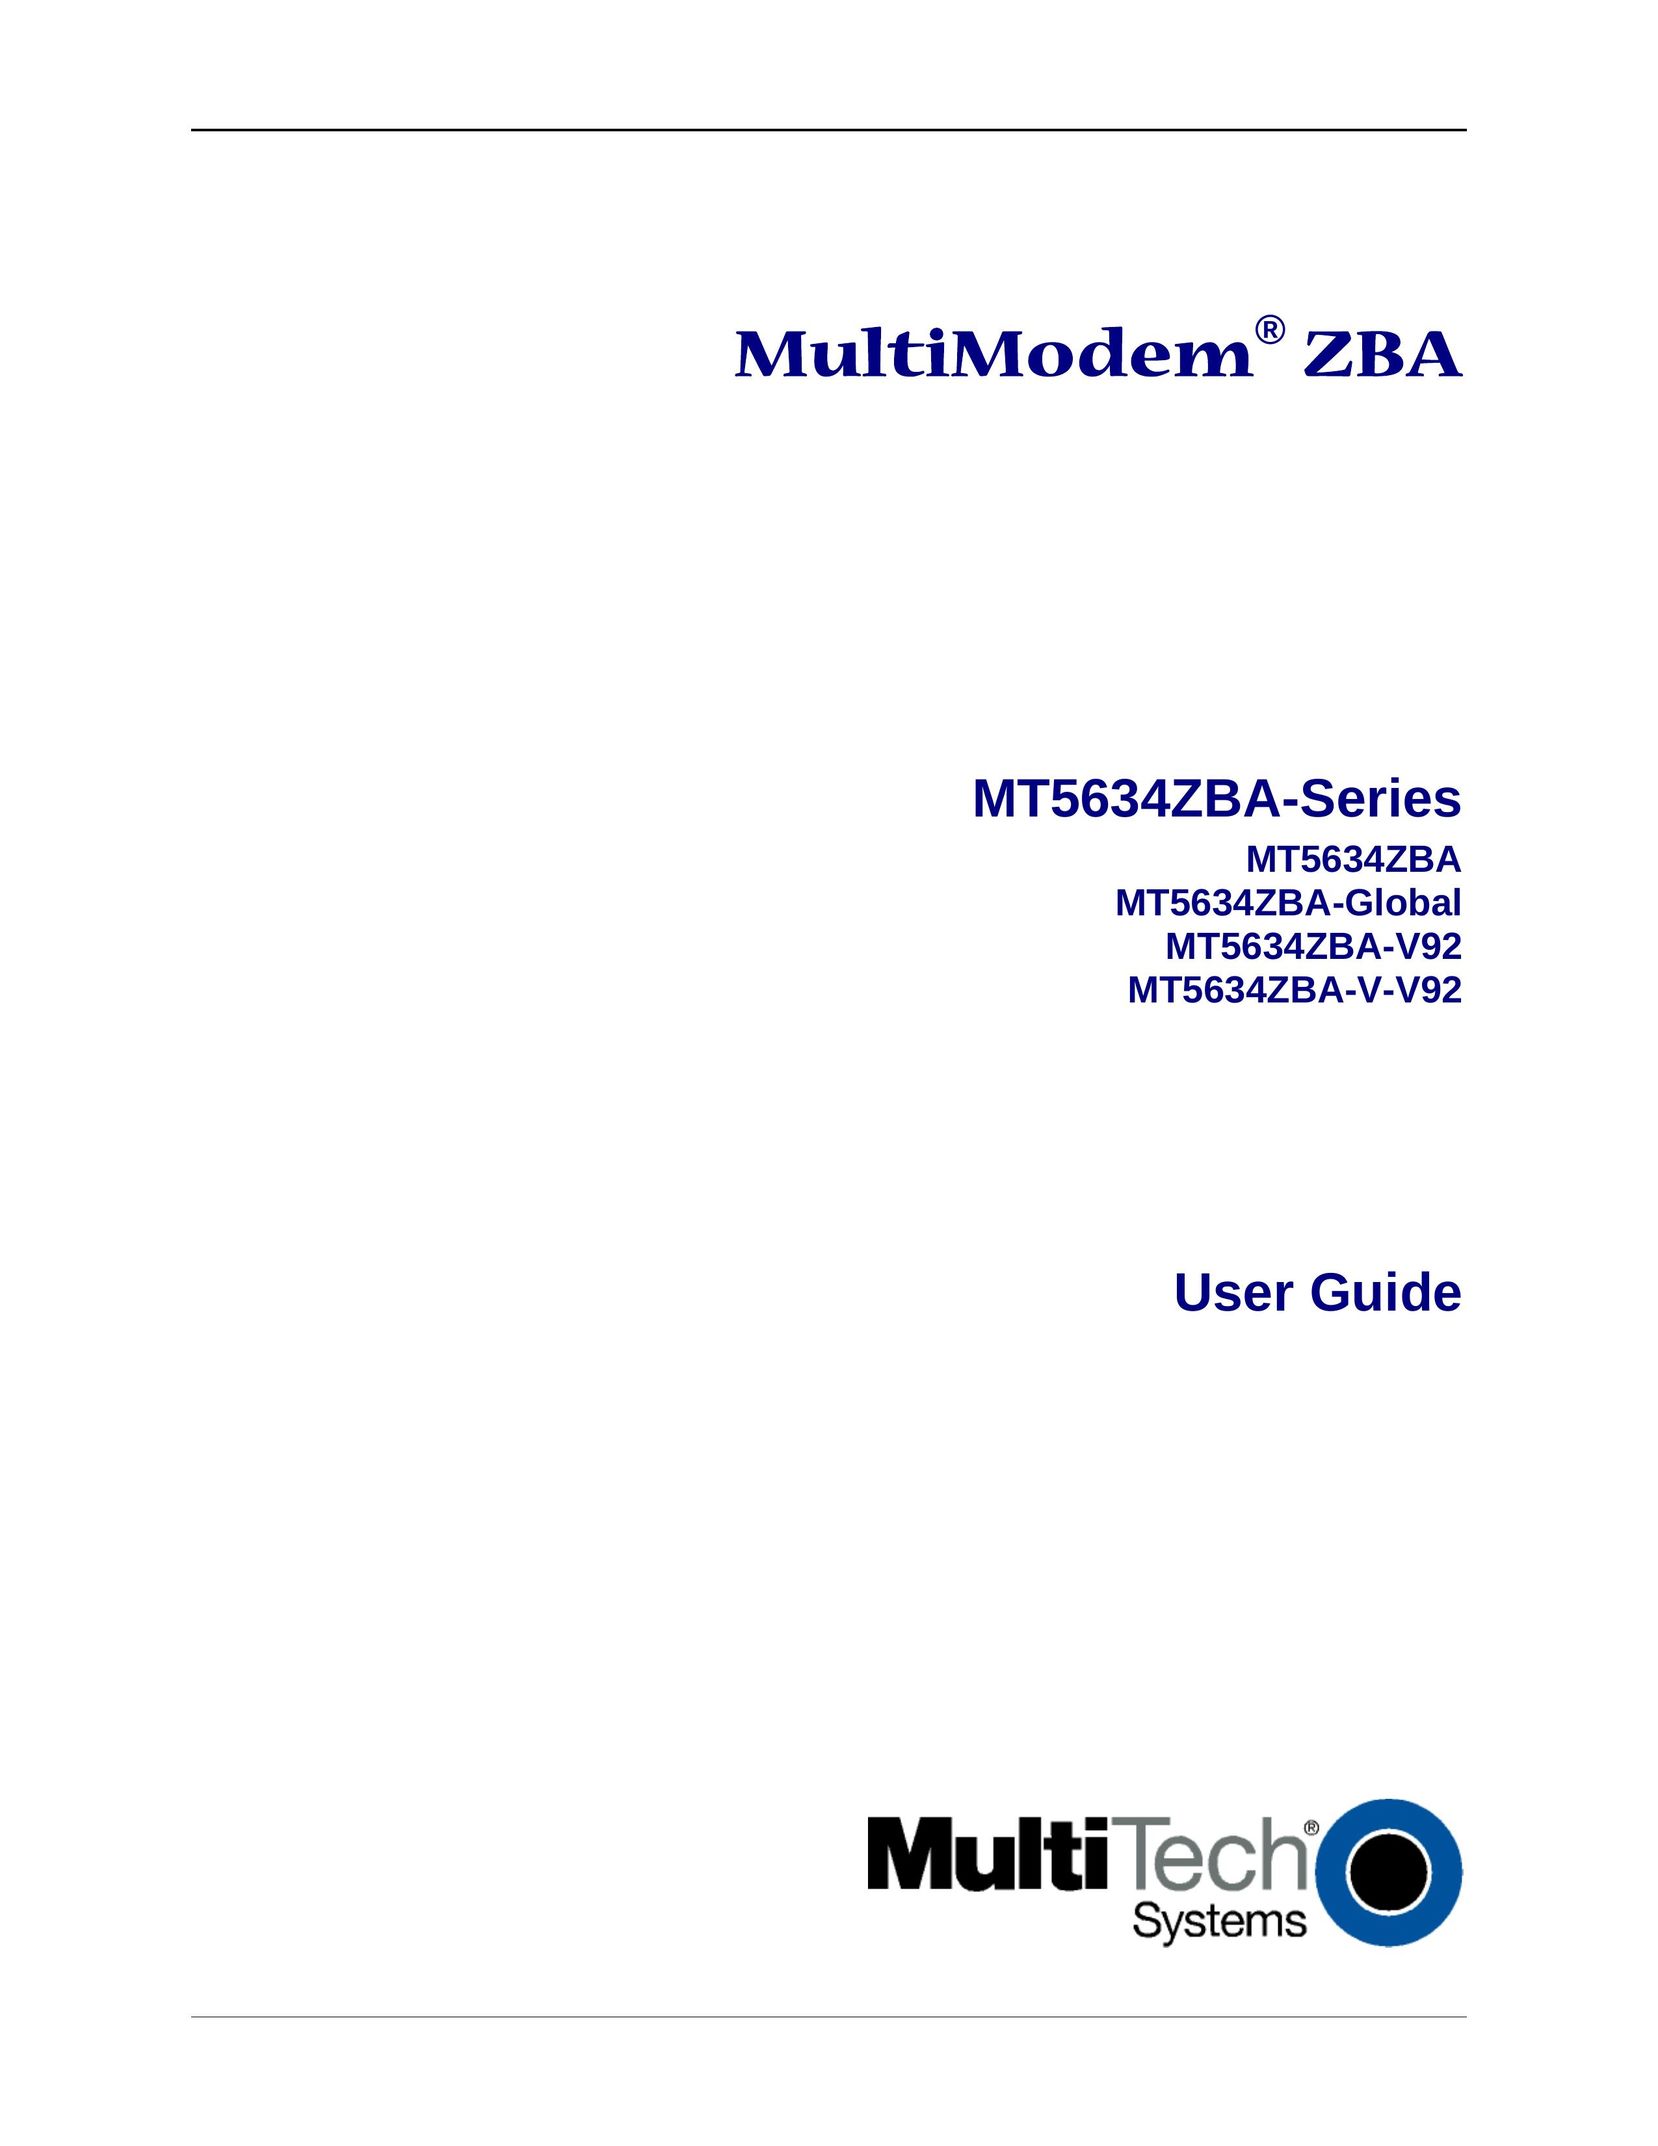 Multitech MT5634ZBA-SERIES Modem User Manual